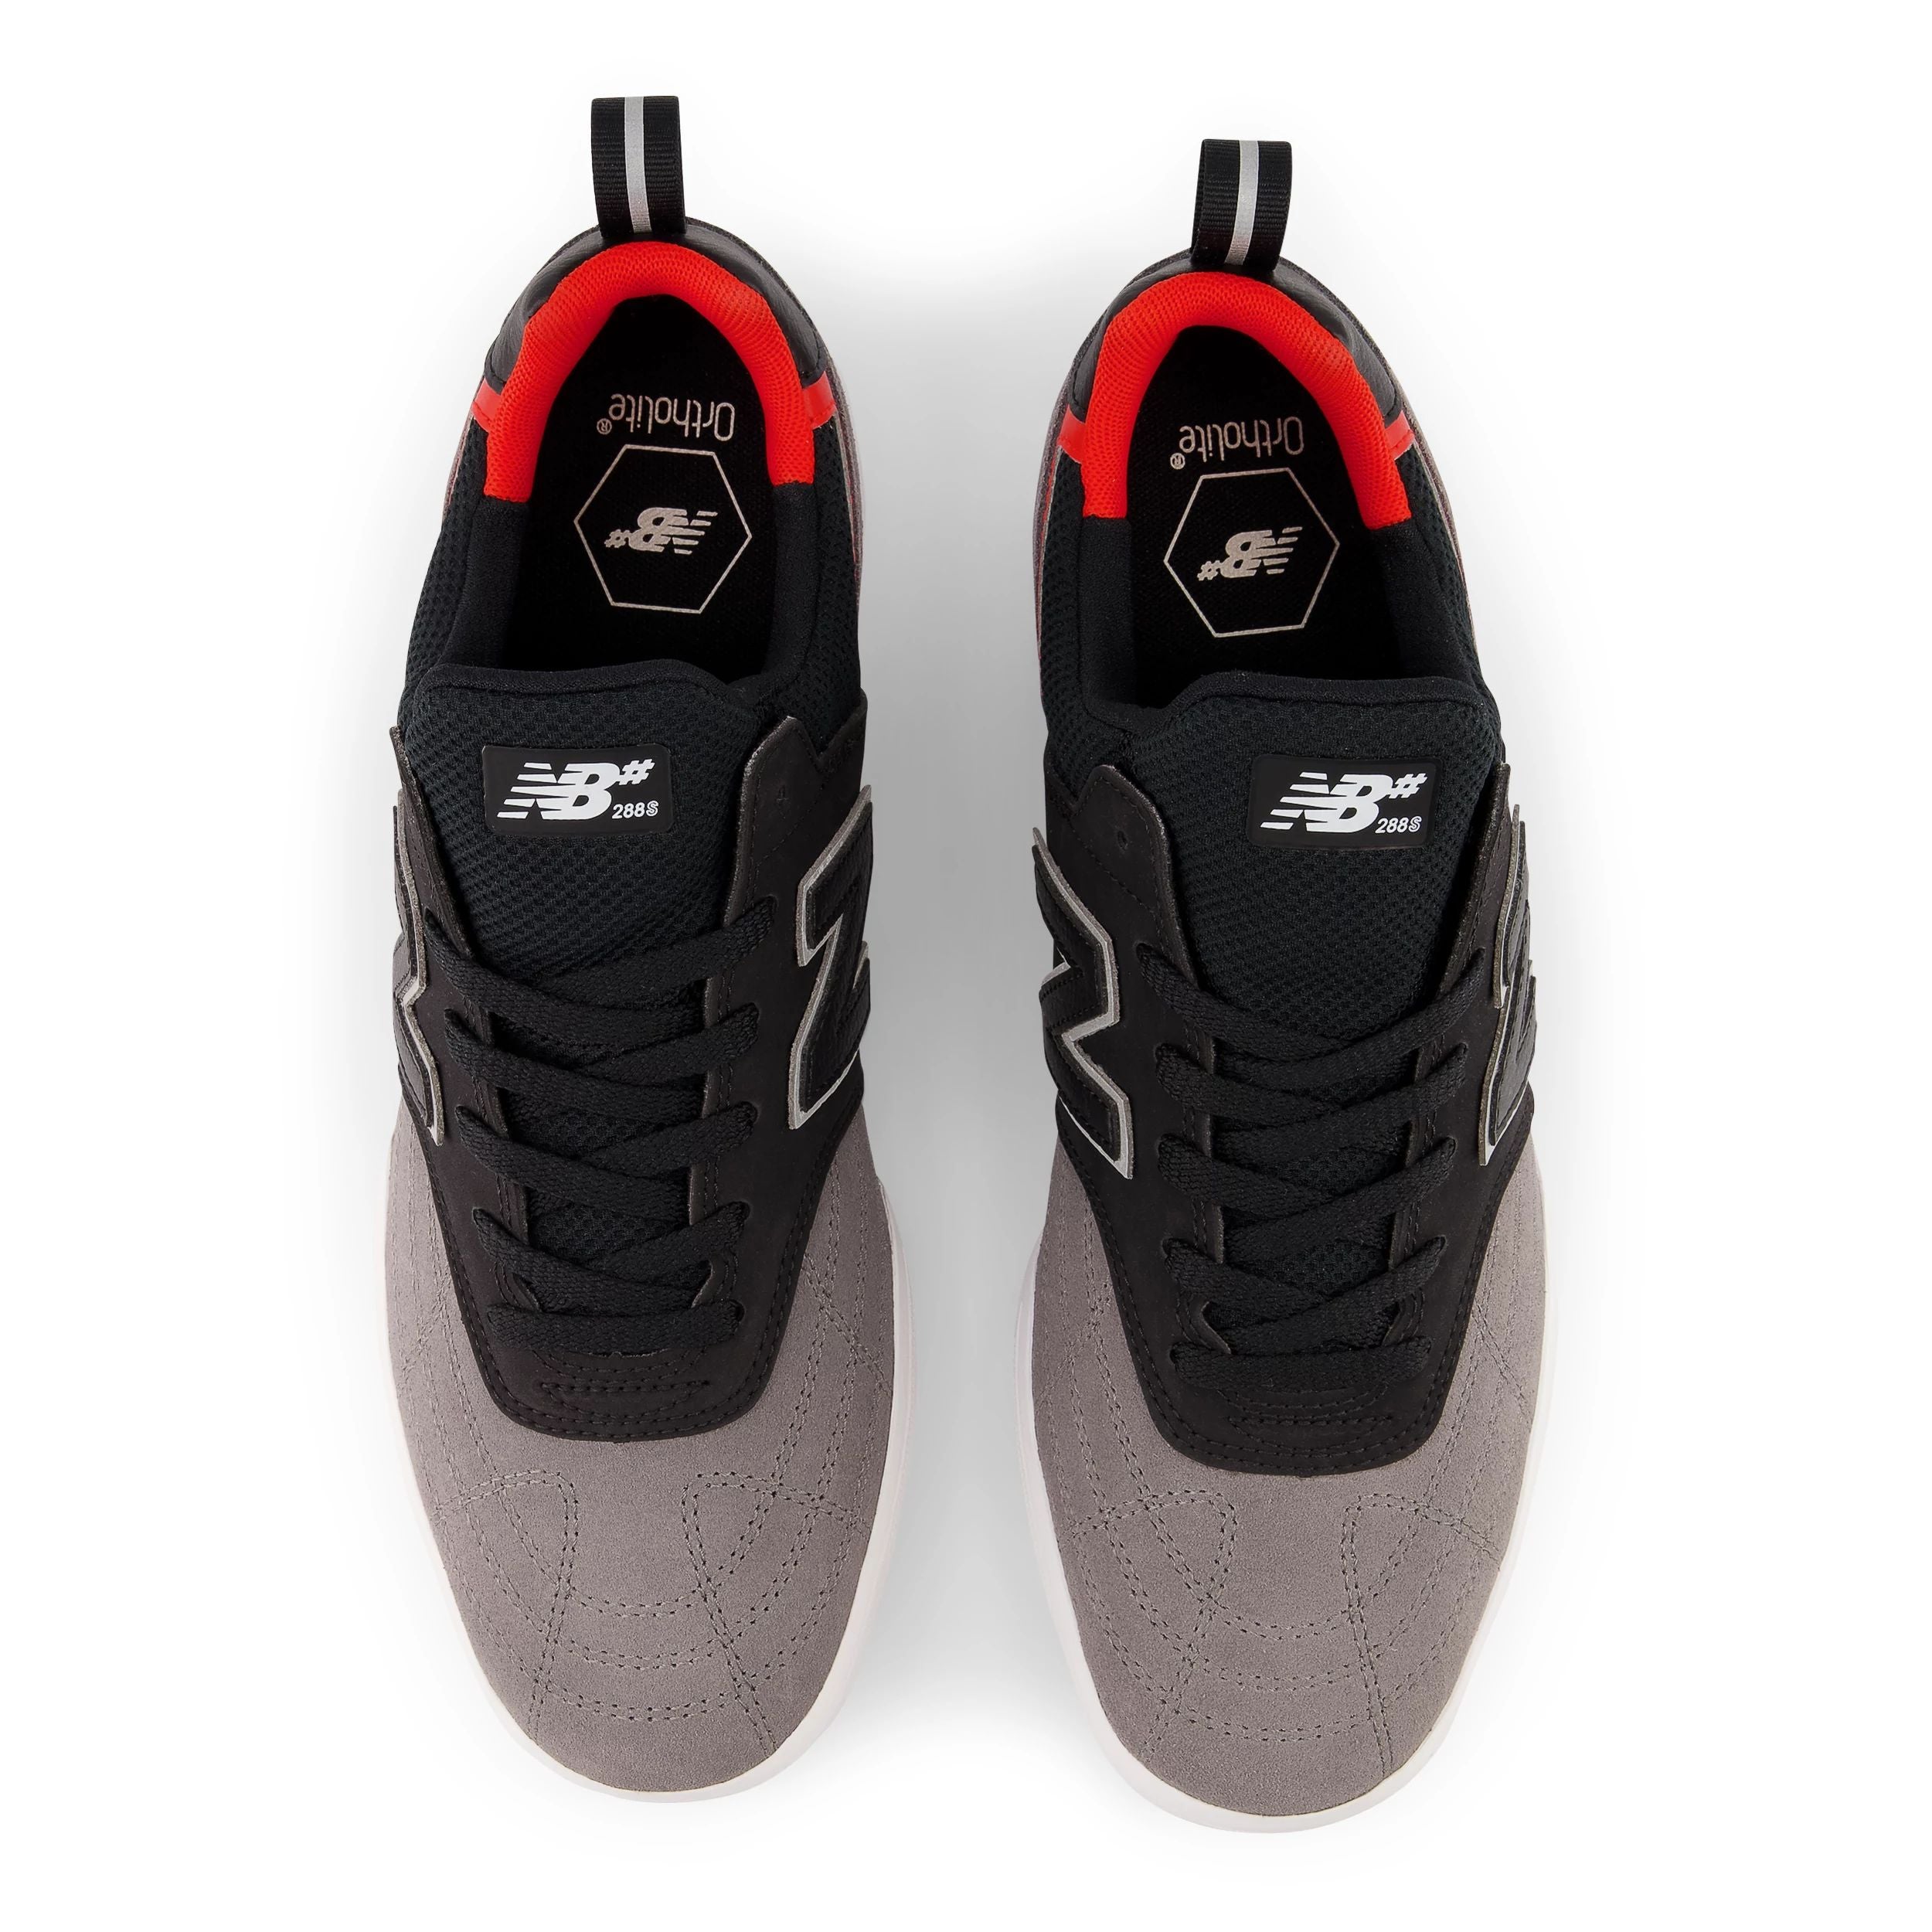 Grey/Black 288 Sport NB Numeric Skateboard Shoe Top